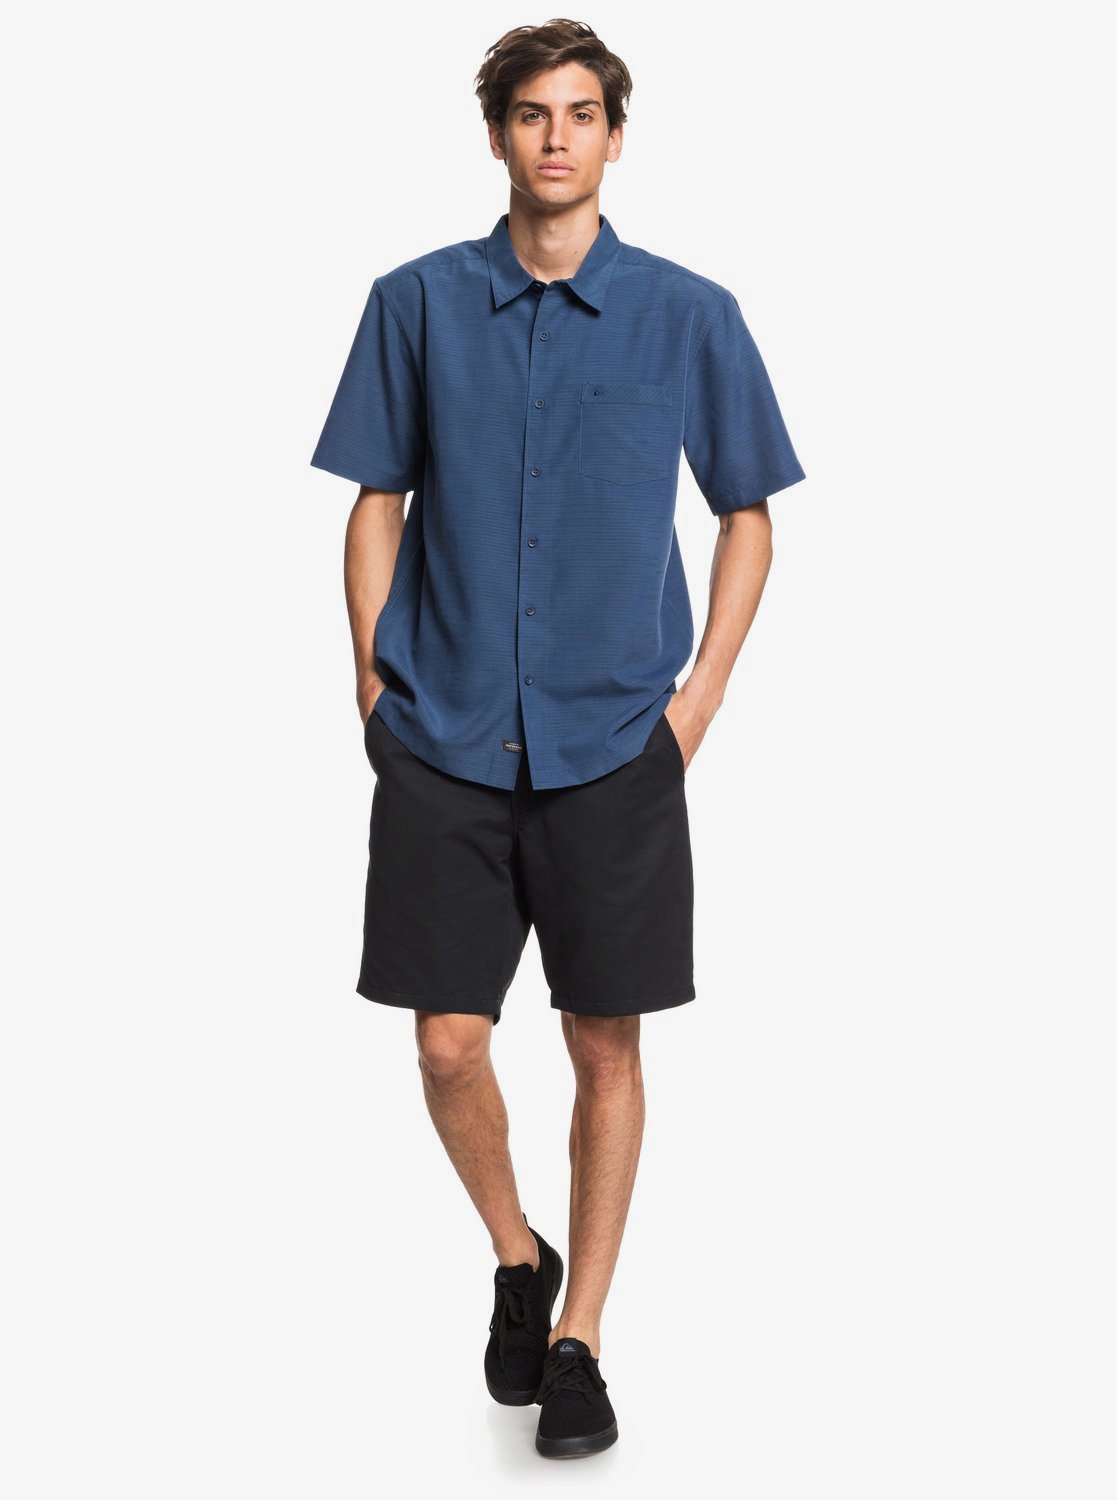 Quiksilver Waterman Centinela Short Sleeve Shirt